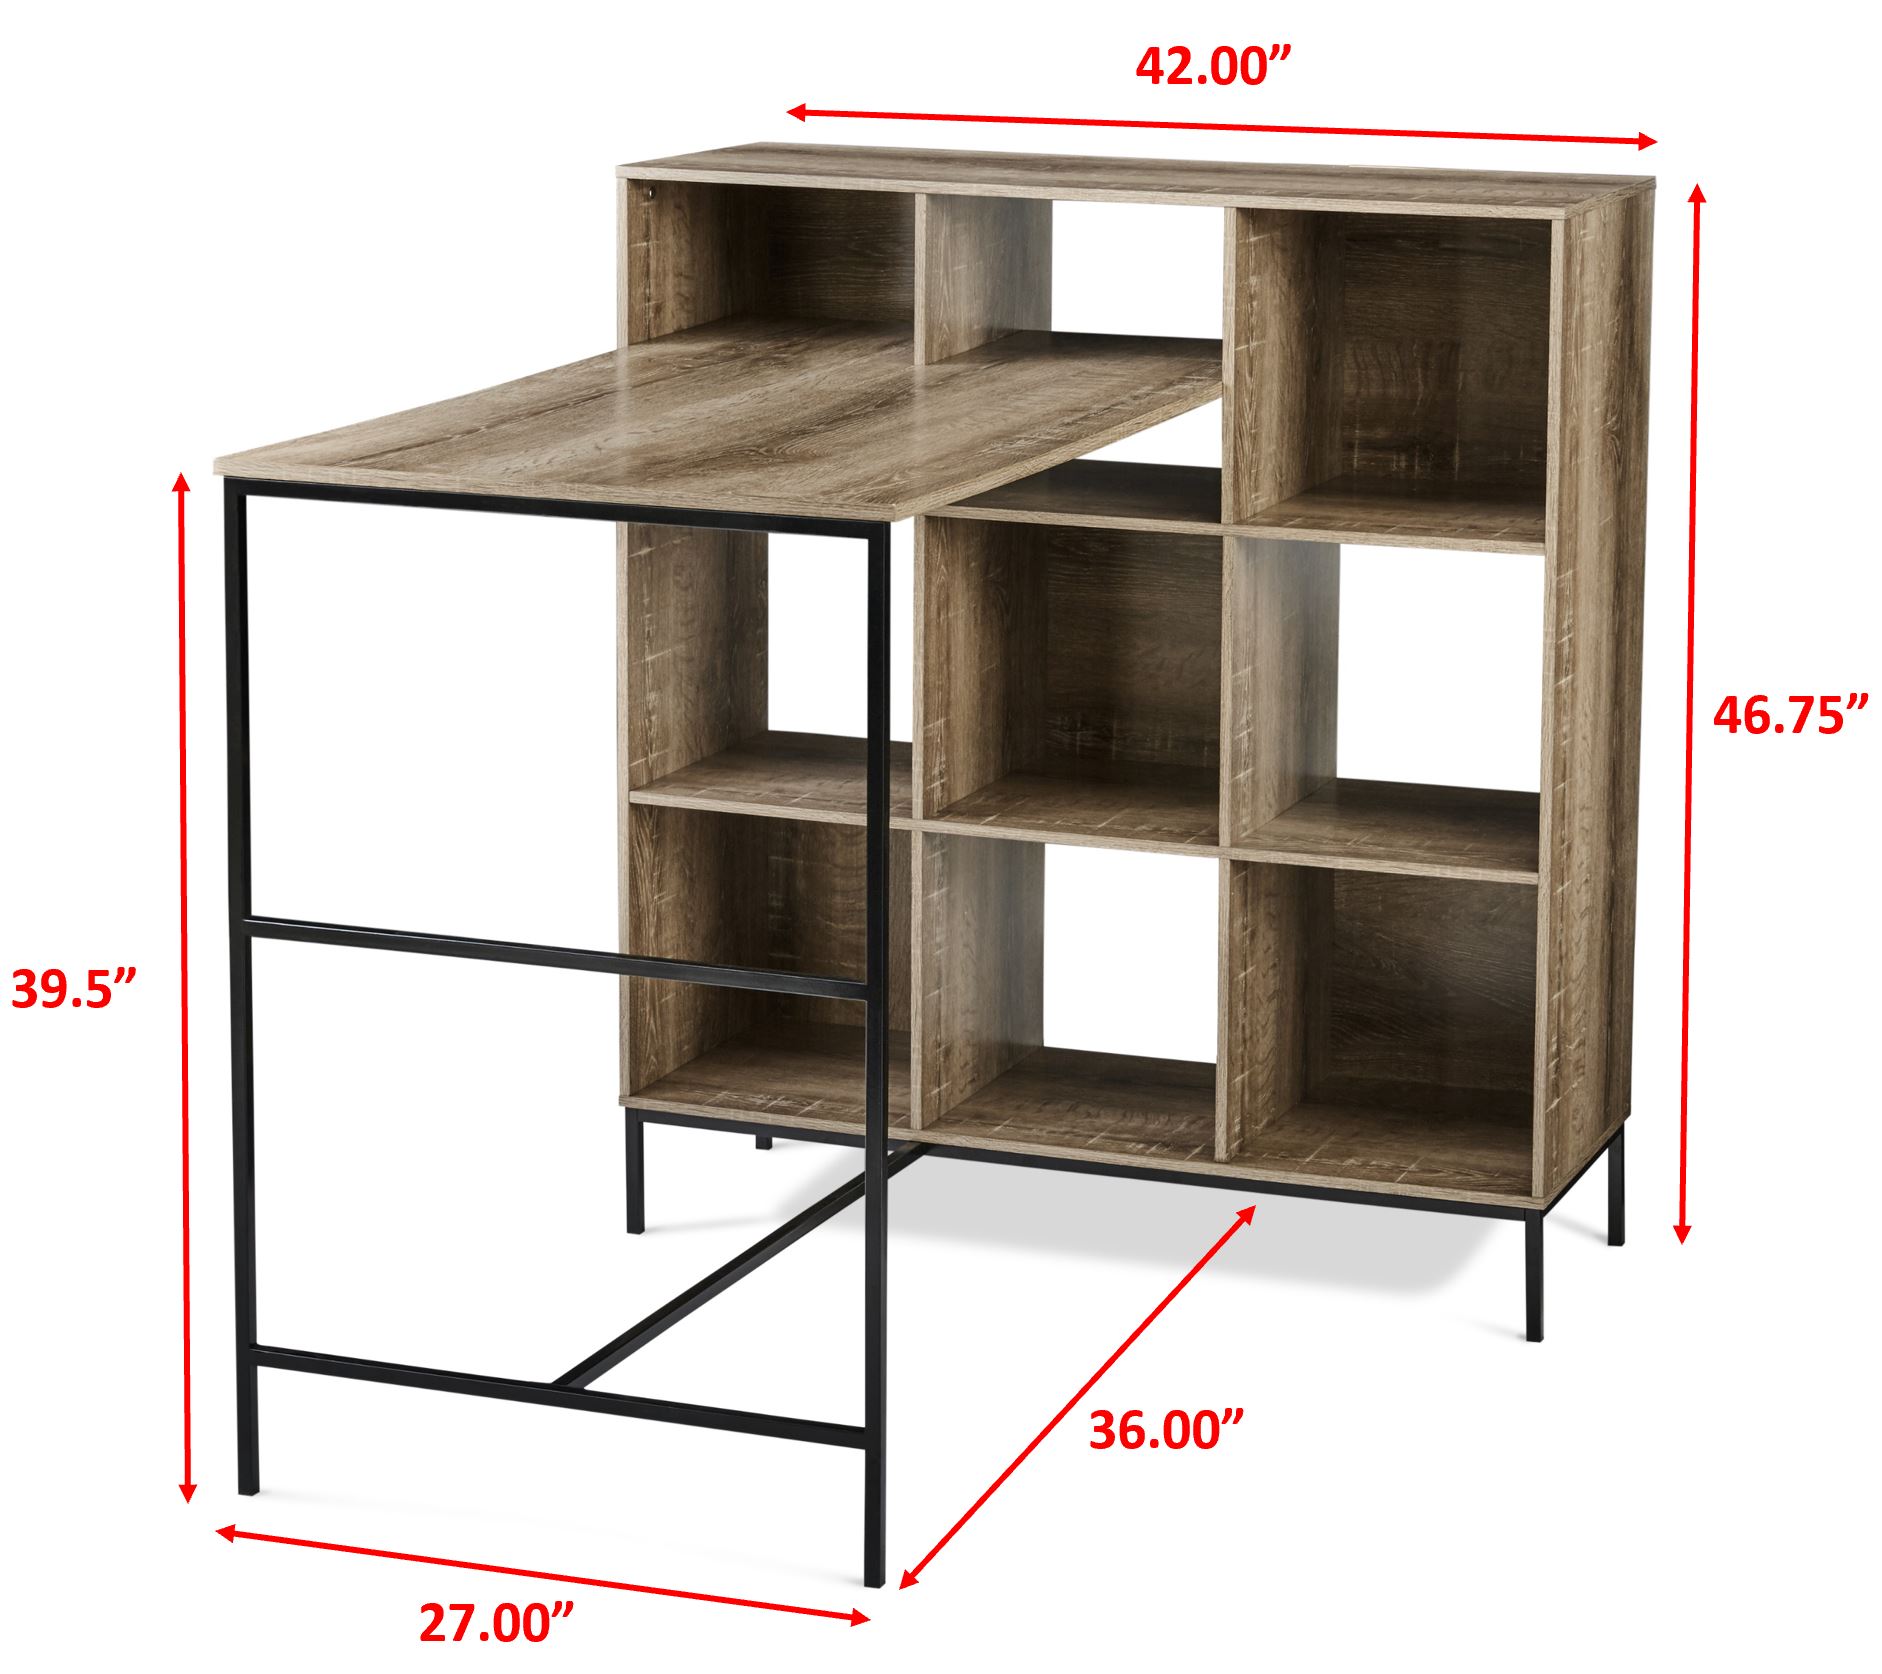 Mainstays 9-Cube Standing Storage Desk, Rustic Brown - image 3 of 5